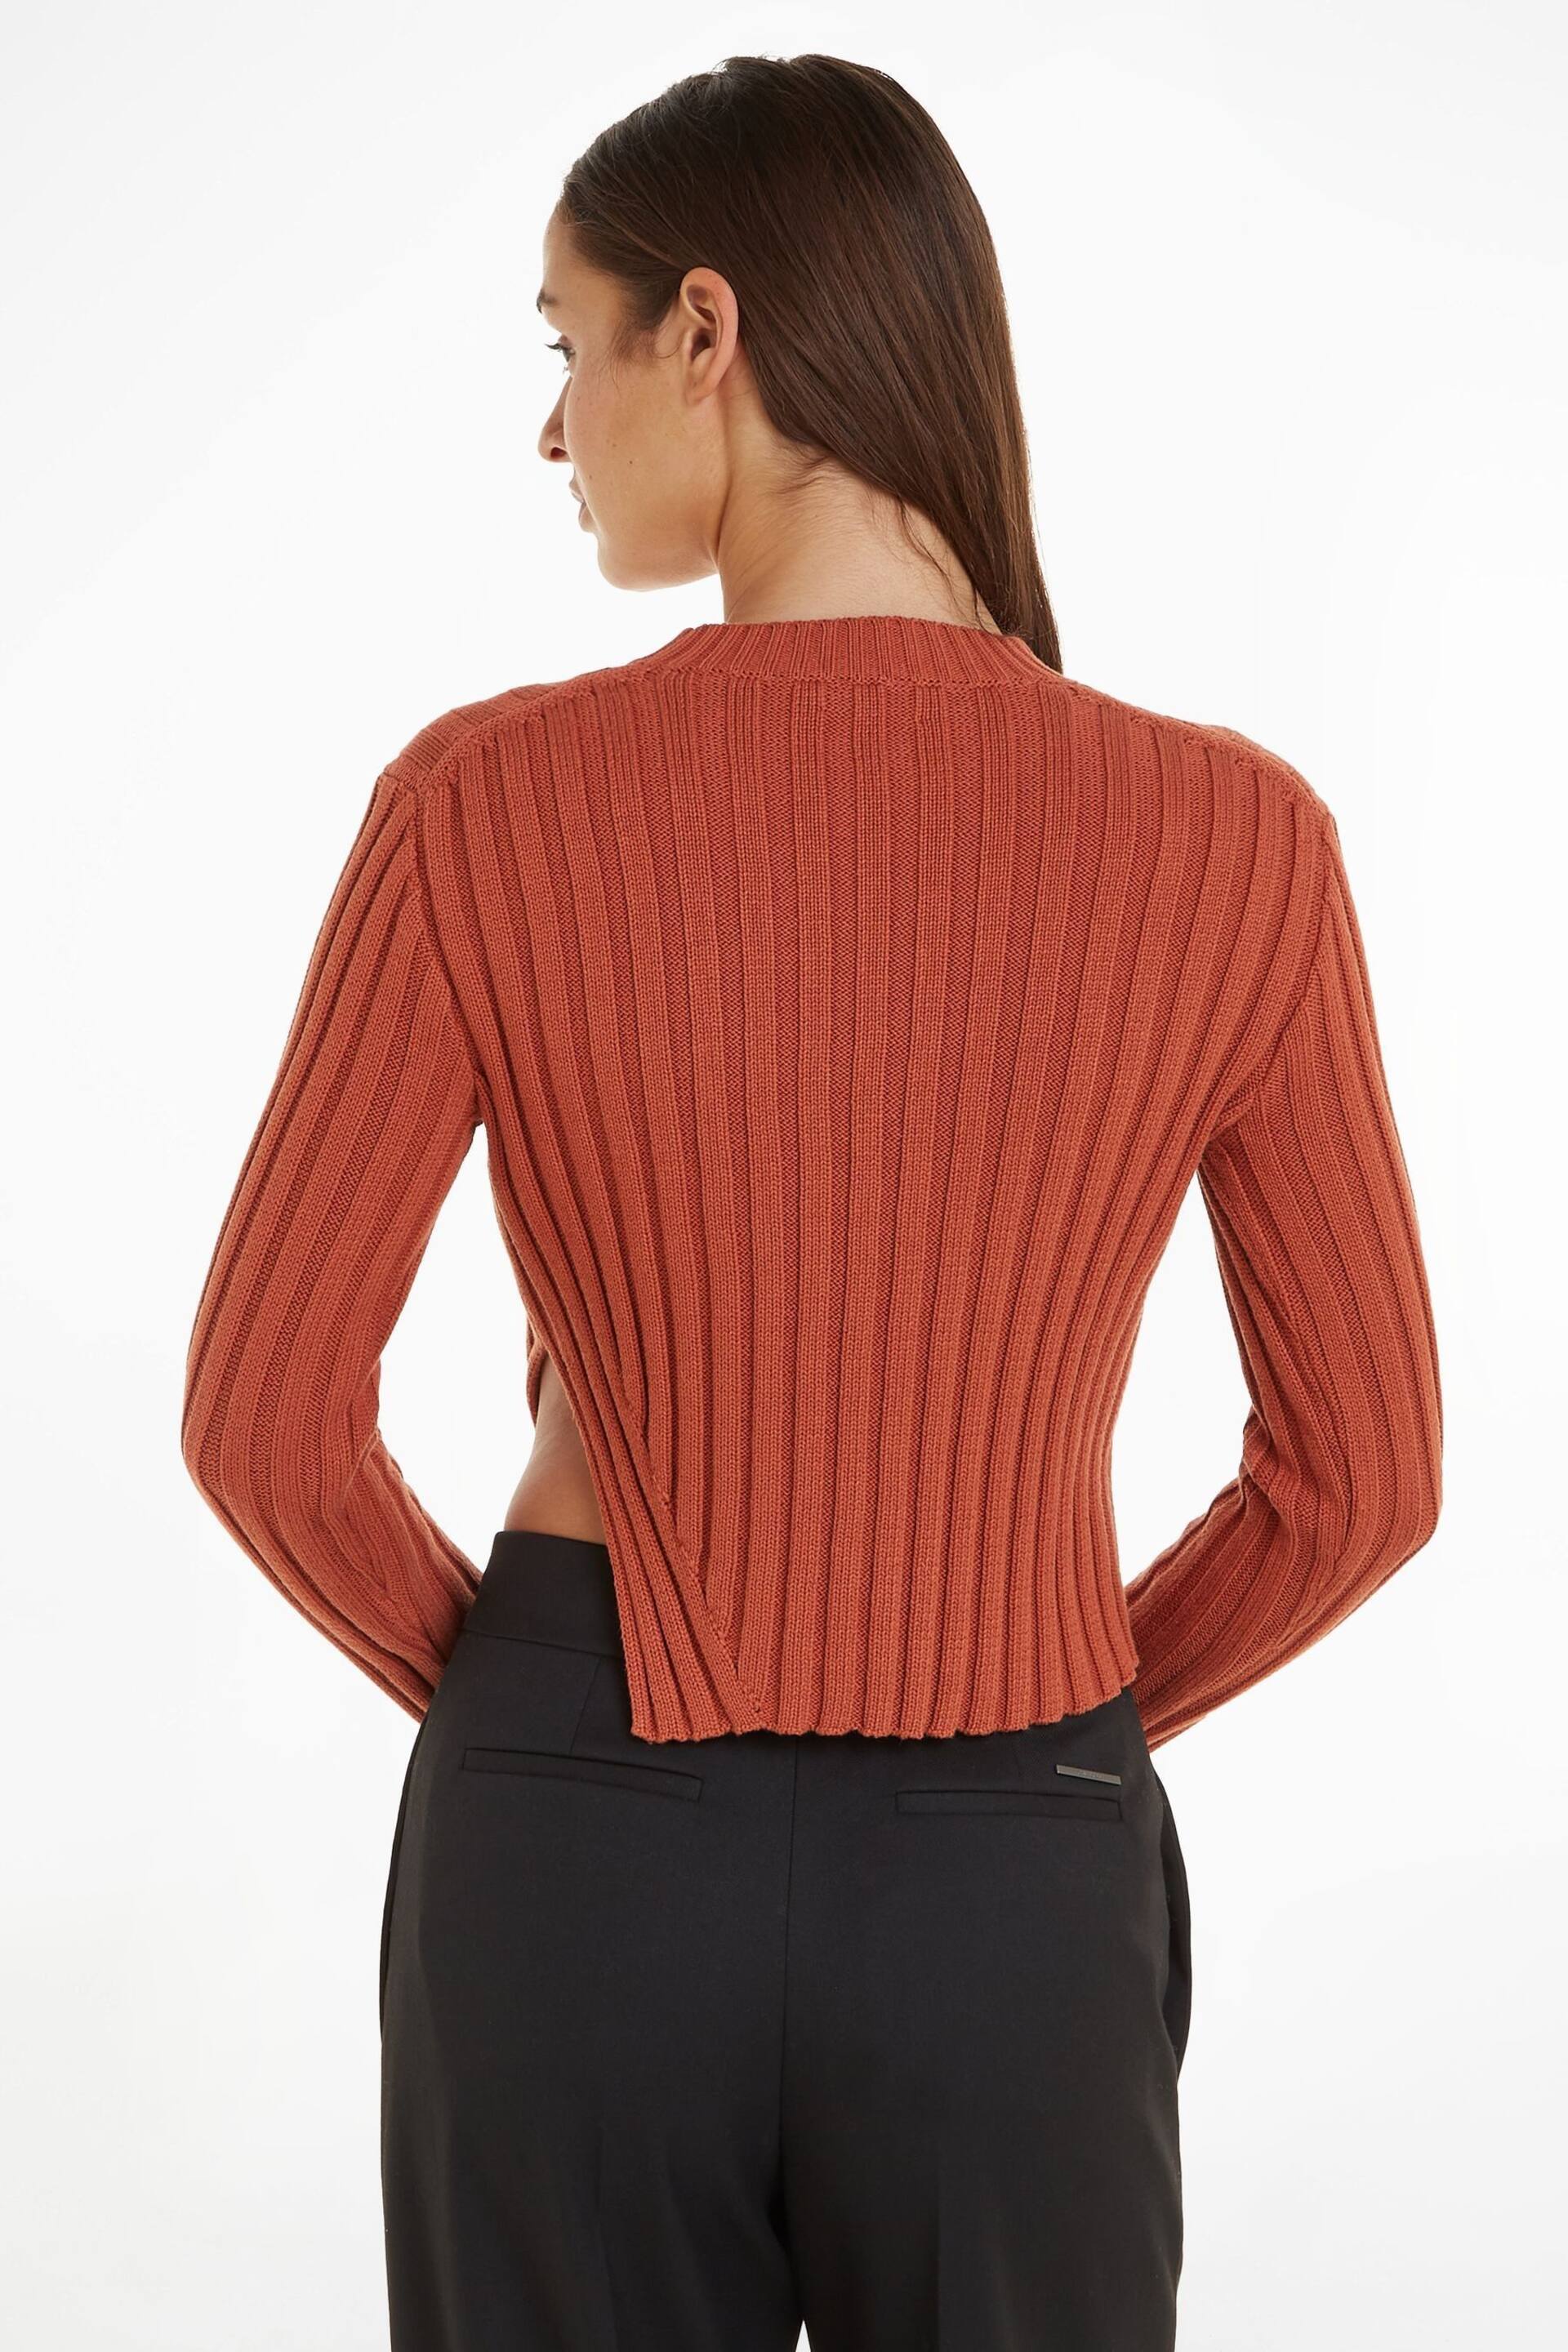 Calvin Klein Brown Cotton Blend Split Sweater - Image 2 of 6